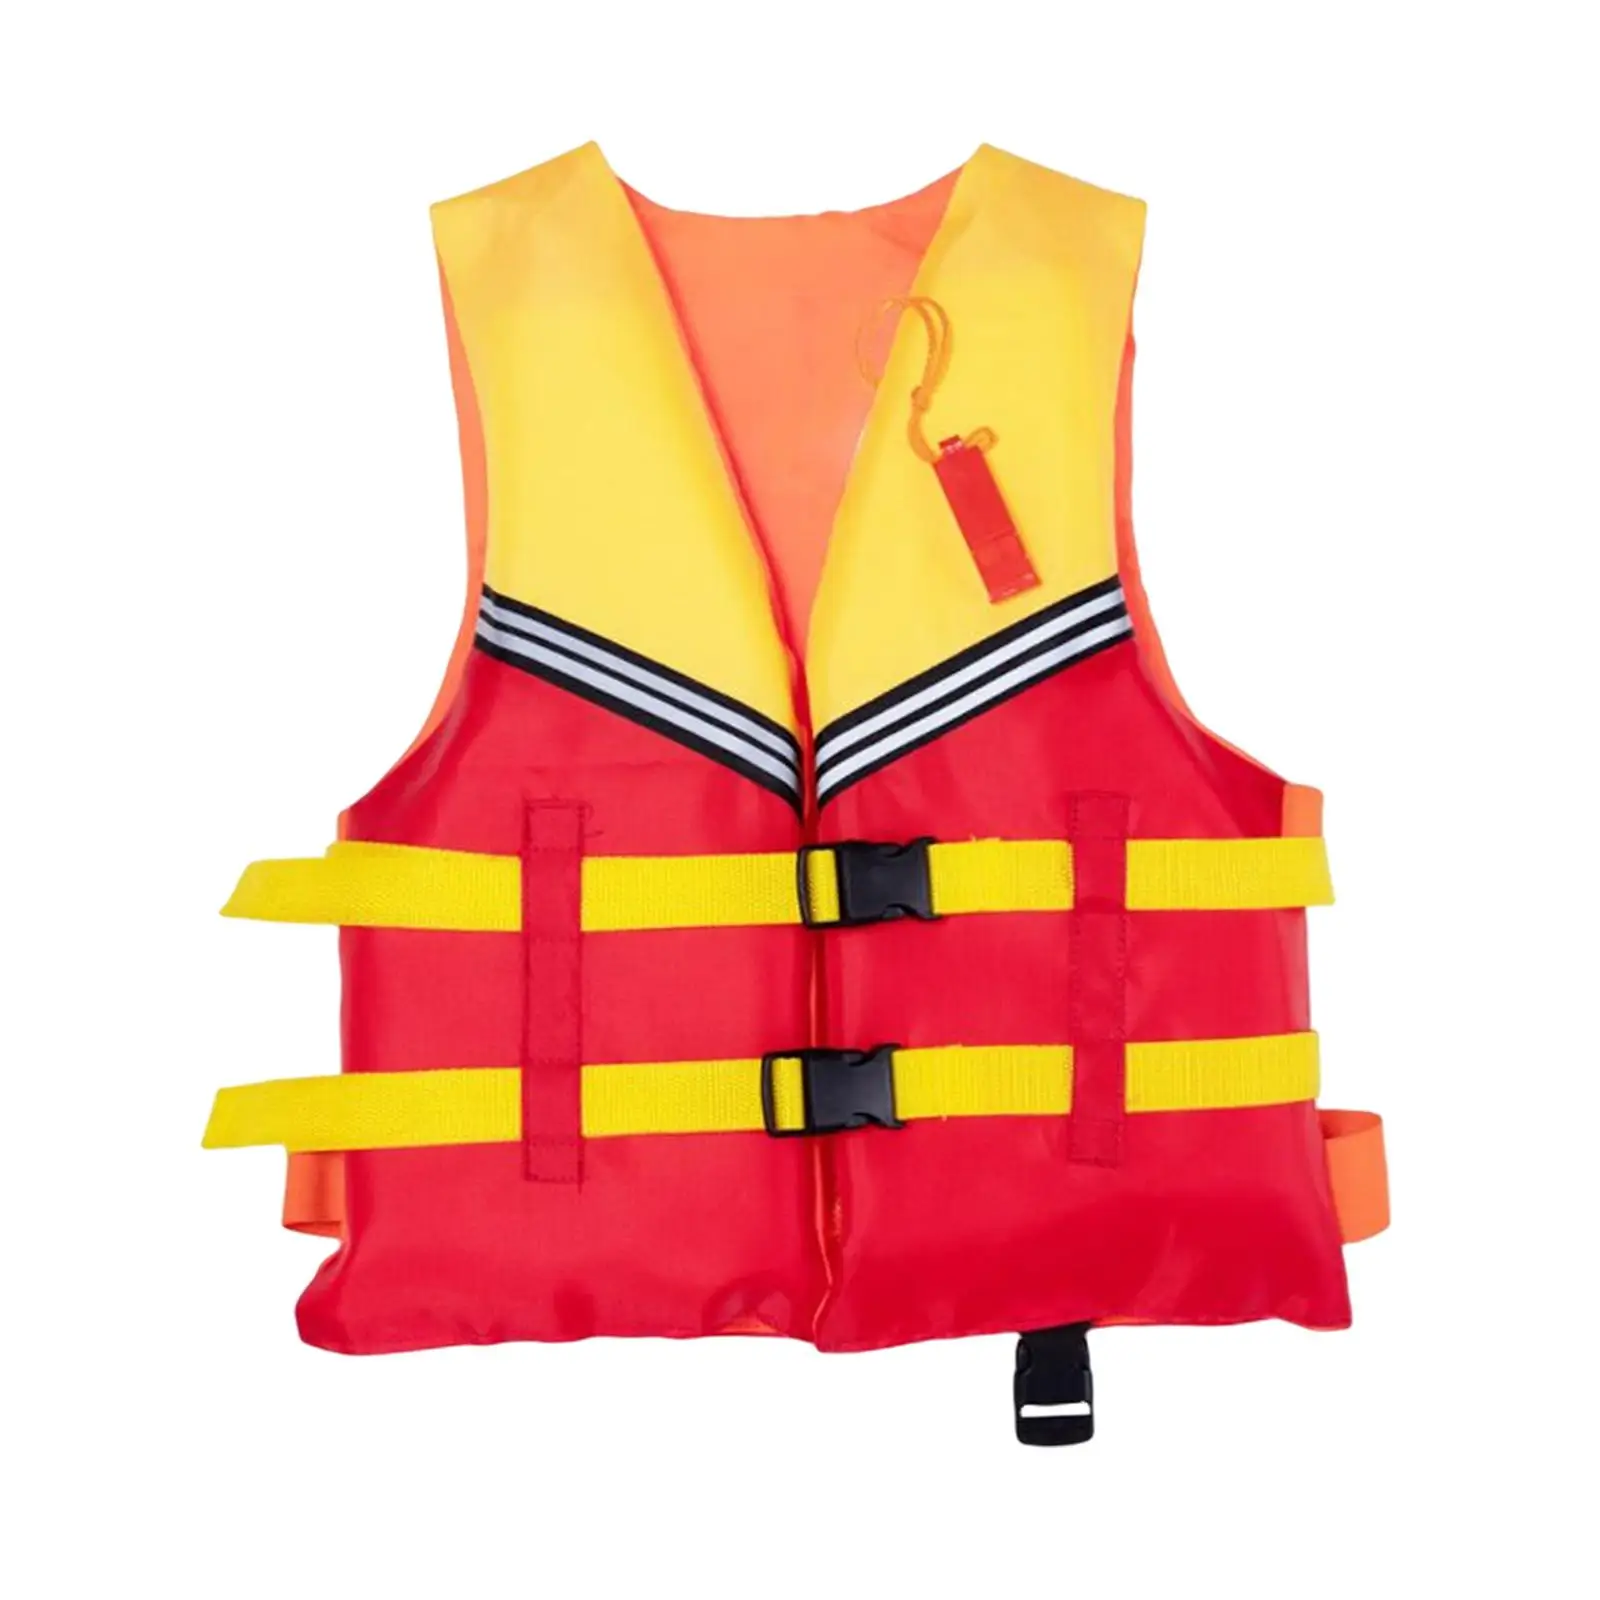 Life Jacket Adjustable Waist Belts Safety Gear Lightweight Buoyancy Aid Swim Vest for Floating Surfing Swimming Water Sport